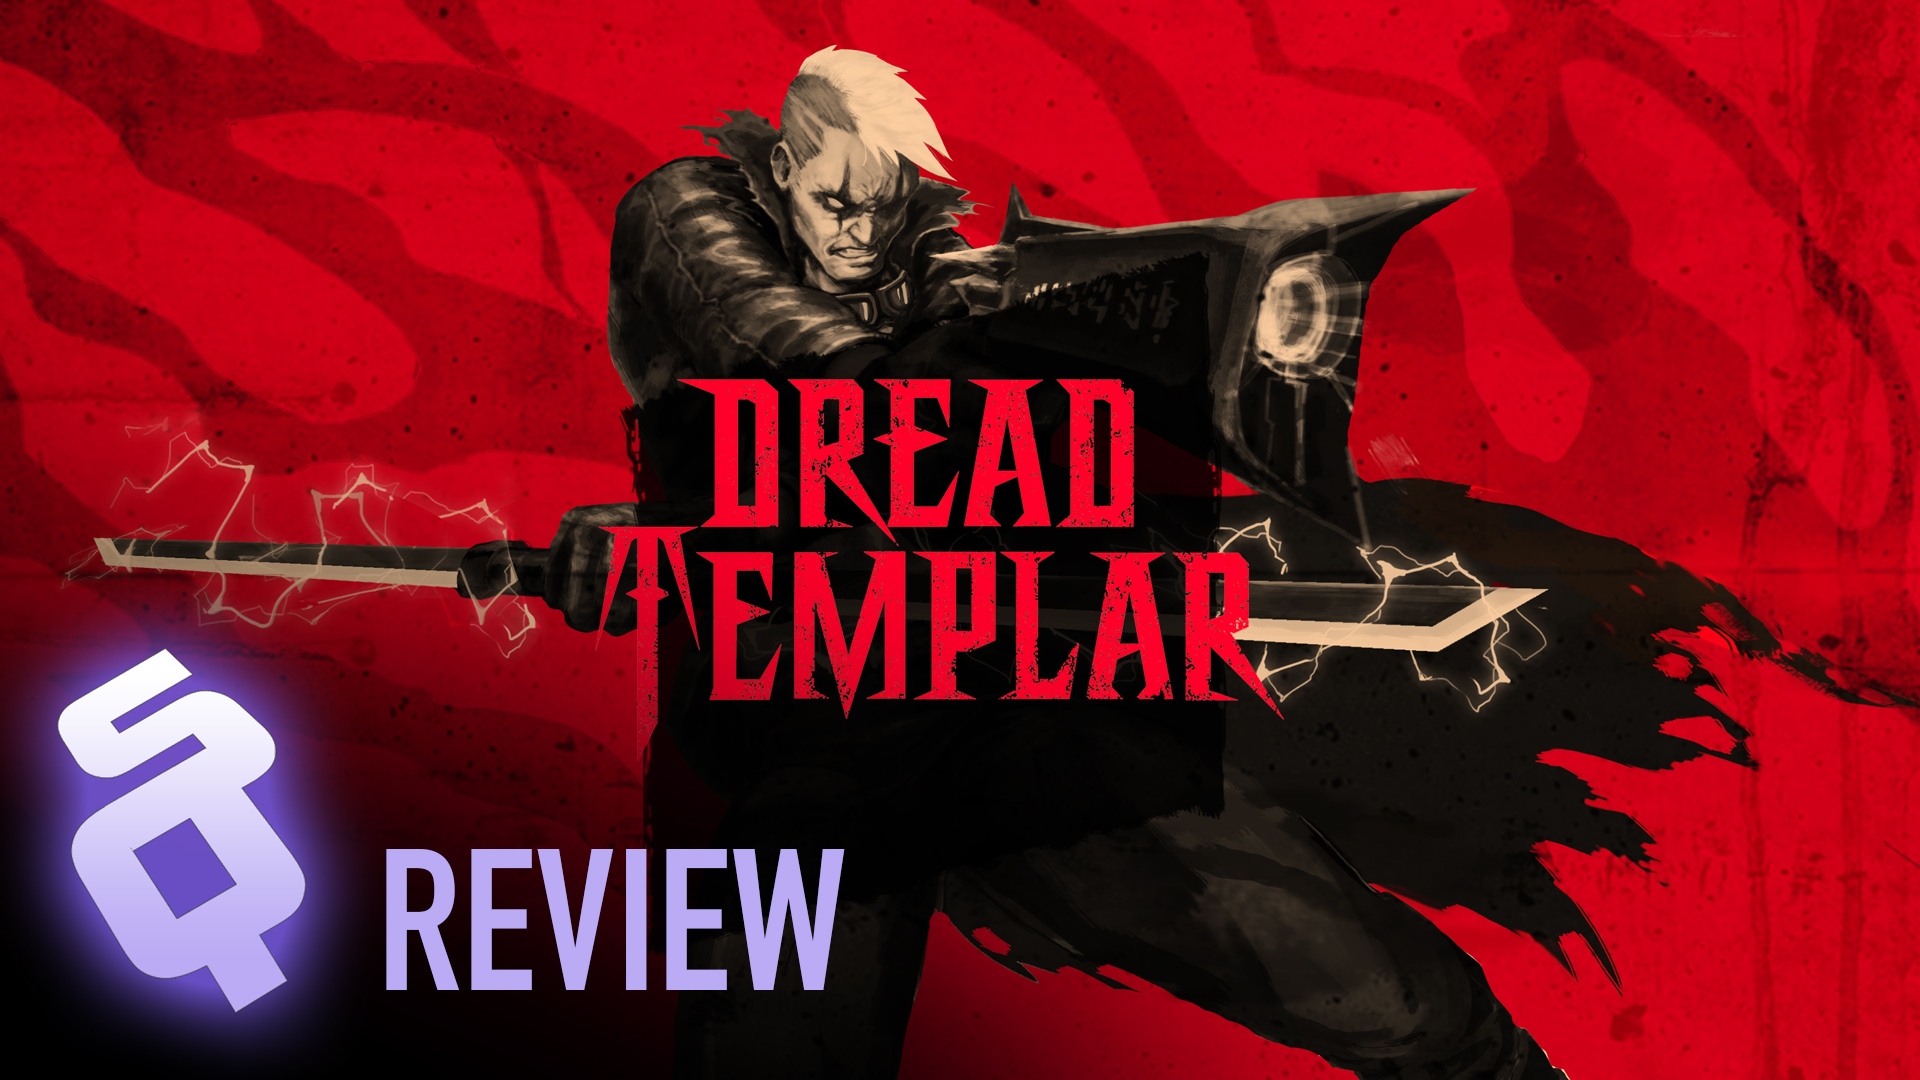 Hot Take: Dread Templar